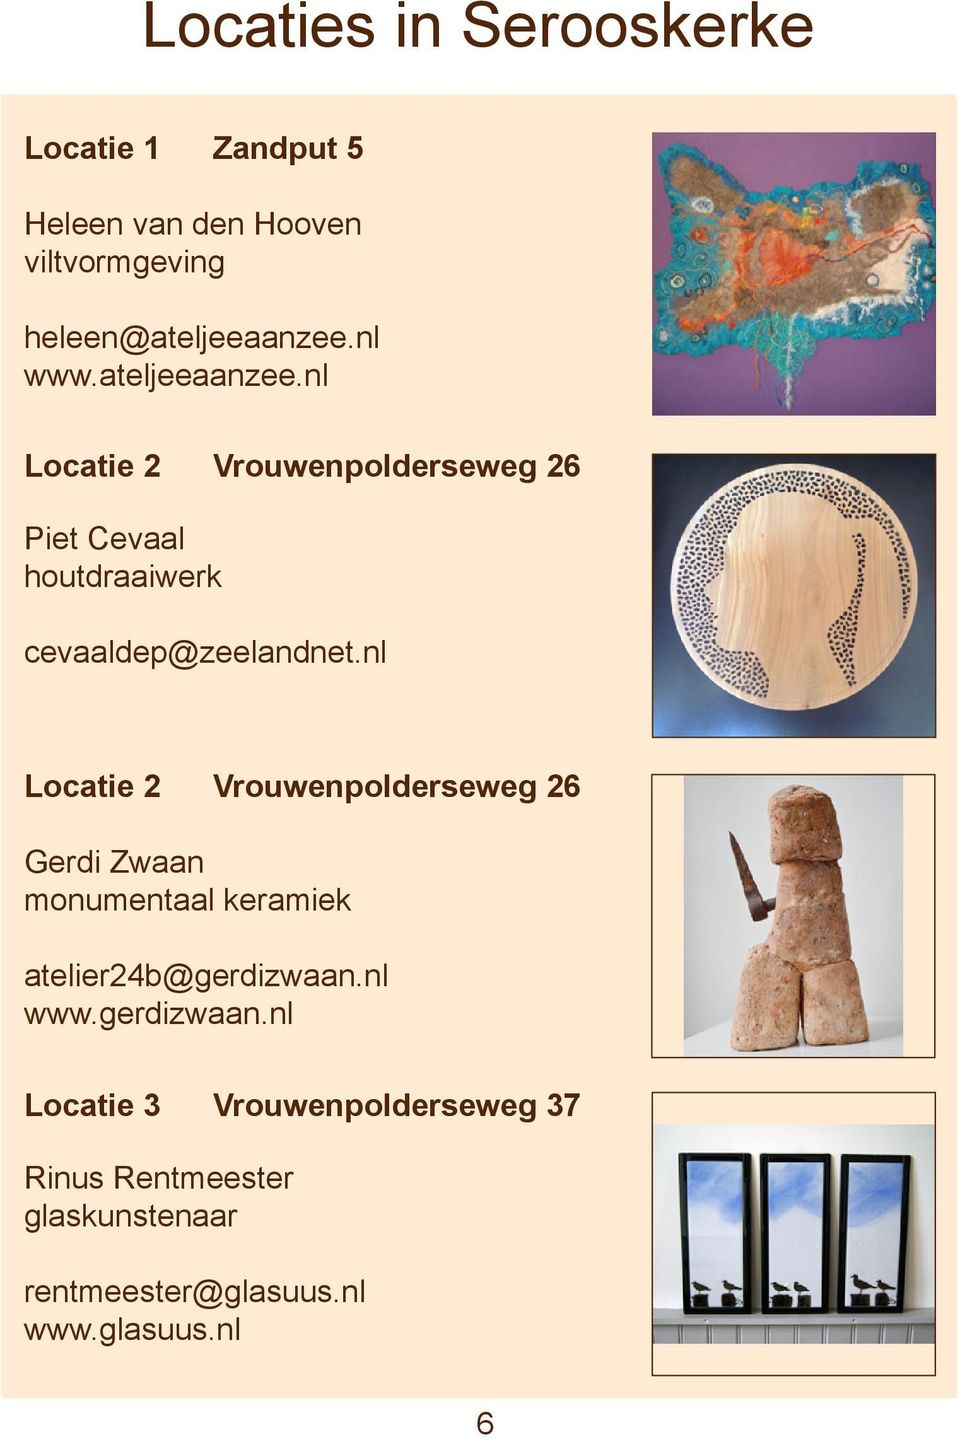 nl Locatie 2 Vrouwenpolderseweg 26 Gerdi Zwaan monumentaal keramiek atelier24b@gerdizwaan.nl www.